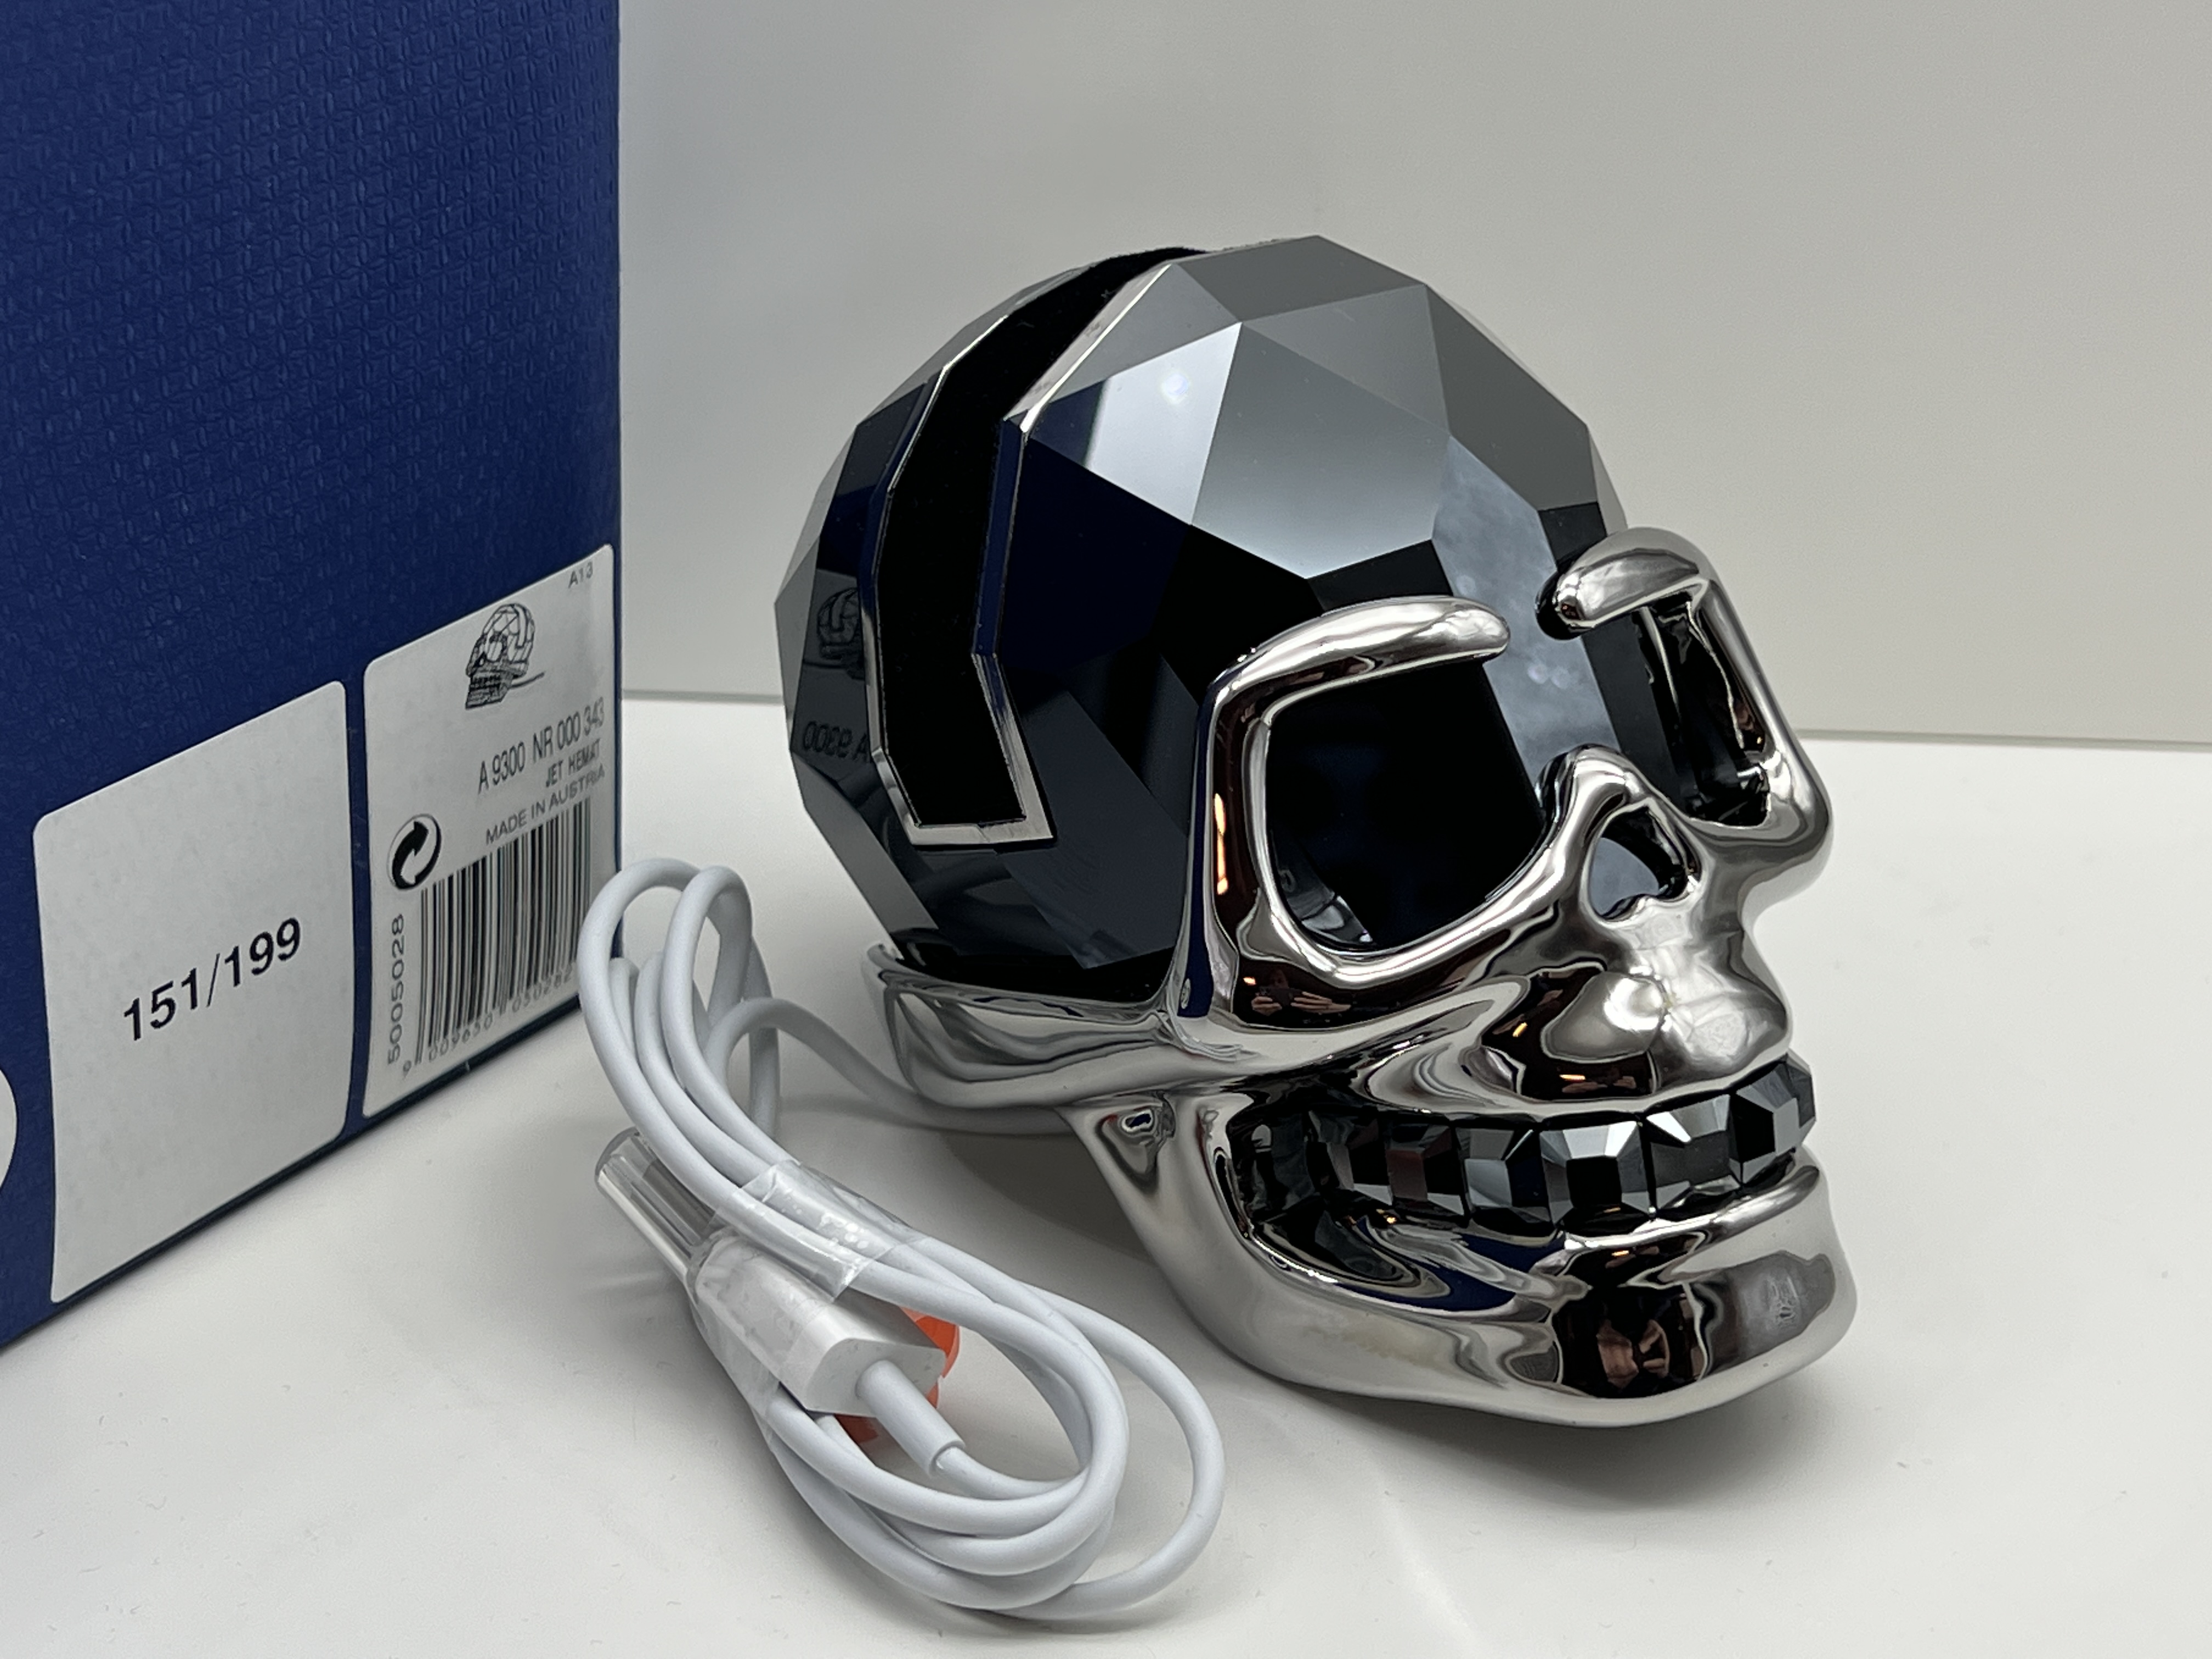  Swarovski Figur 5005028 Skull Docking Station 9 cm Ltd. Edition - Ovp - Zertifikat - Top Zustand 